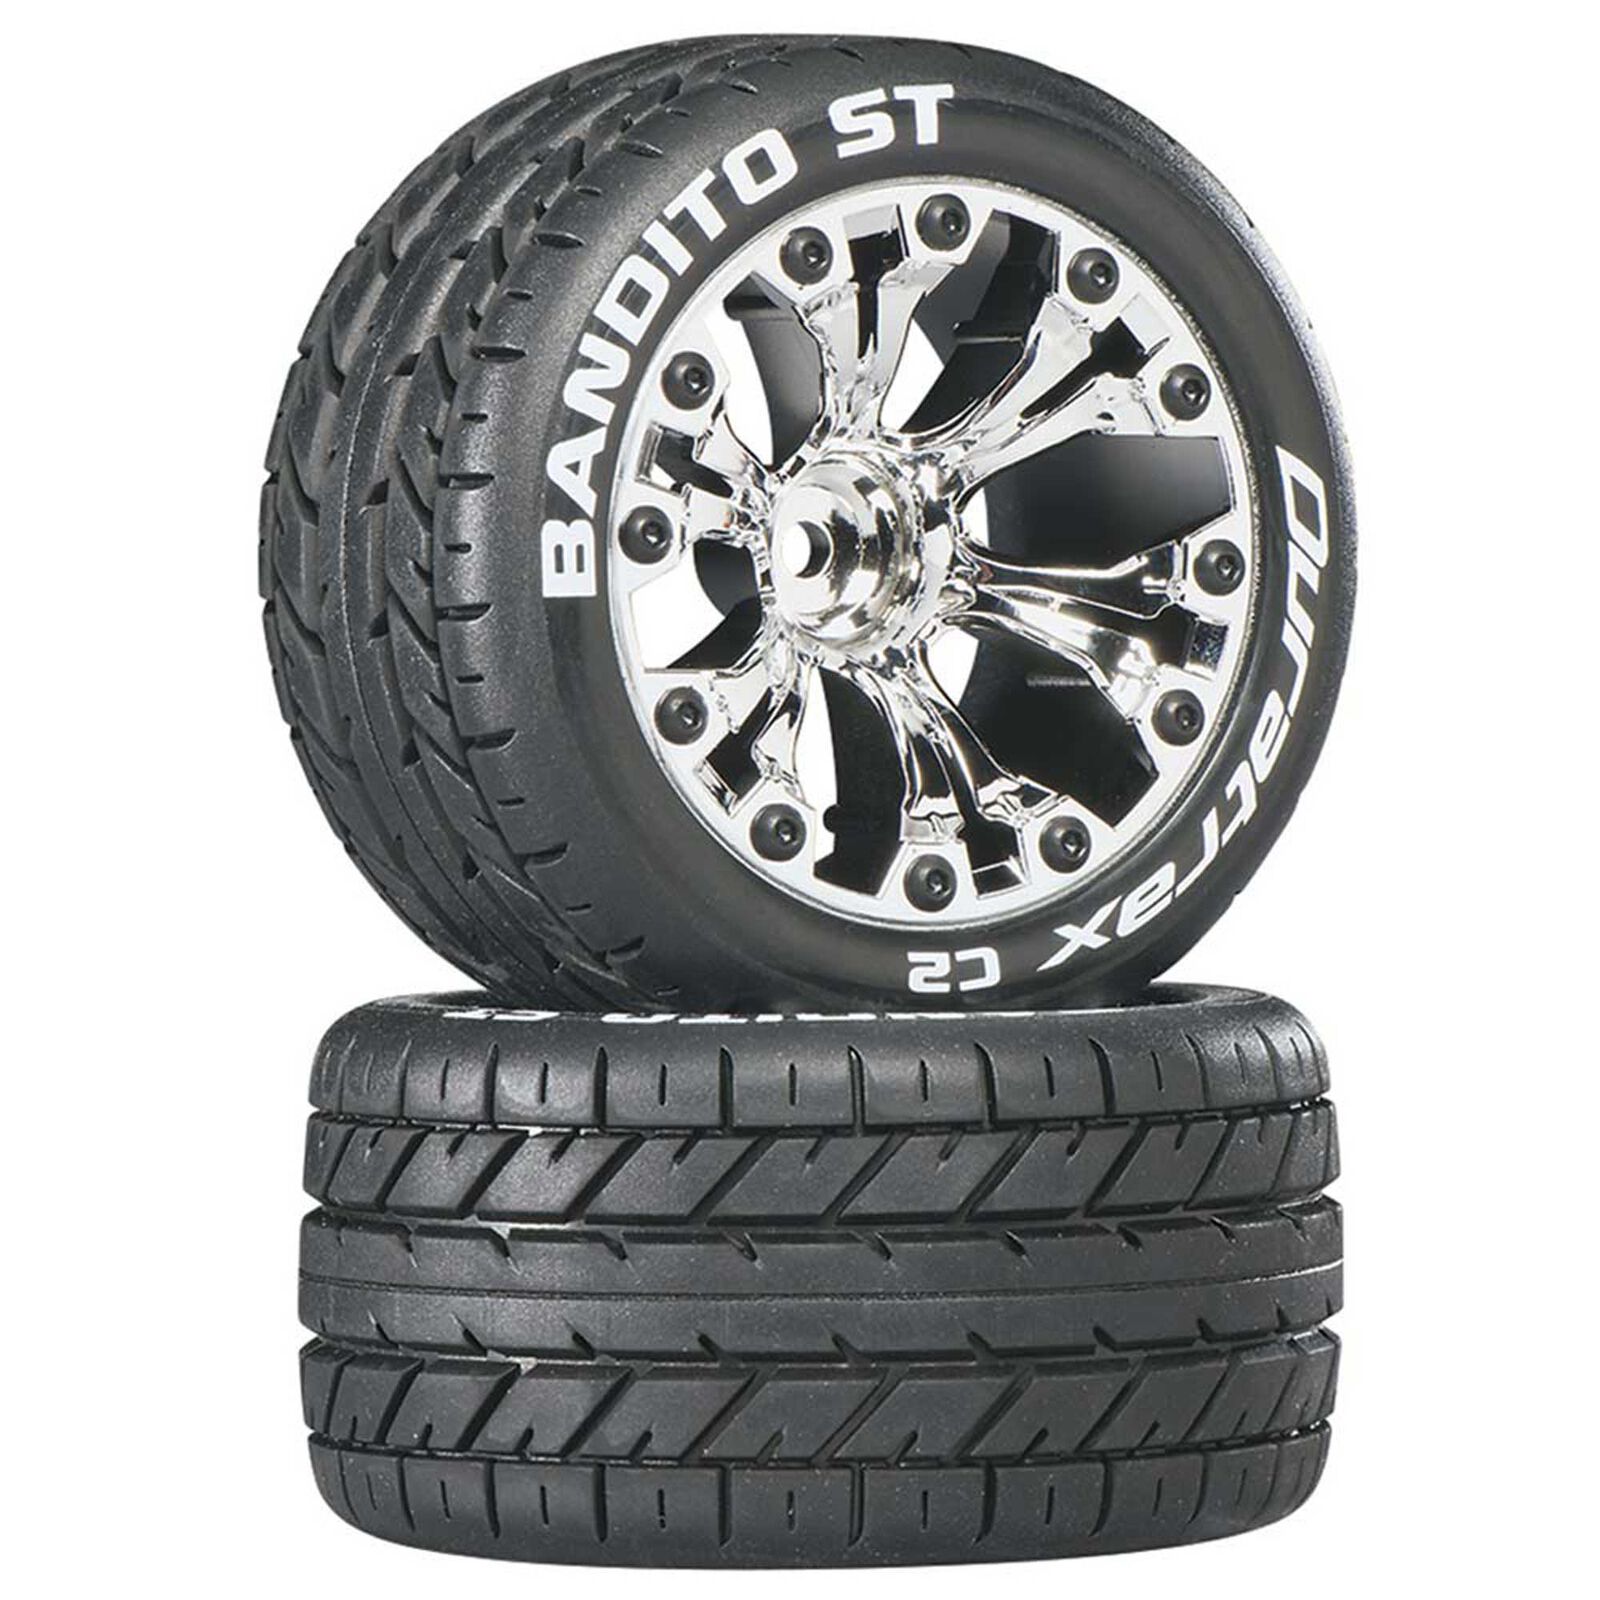 Bandito ST 2.8" Mounted 1/2" Offset C2 Tires, Chrome (2)